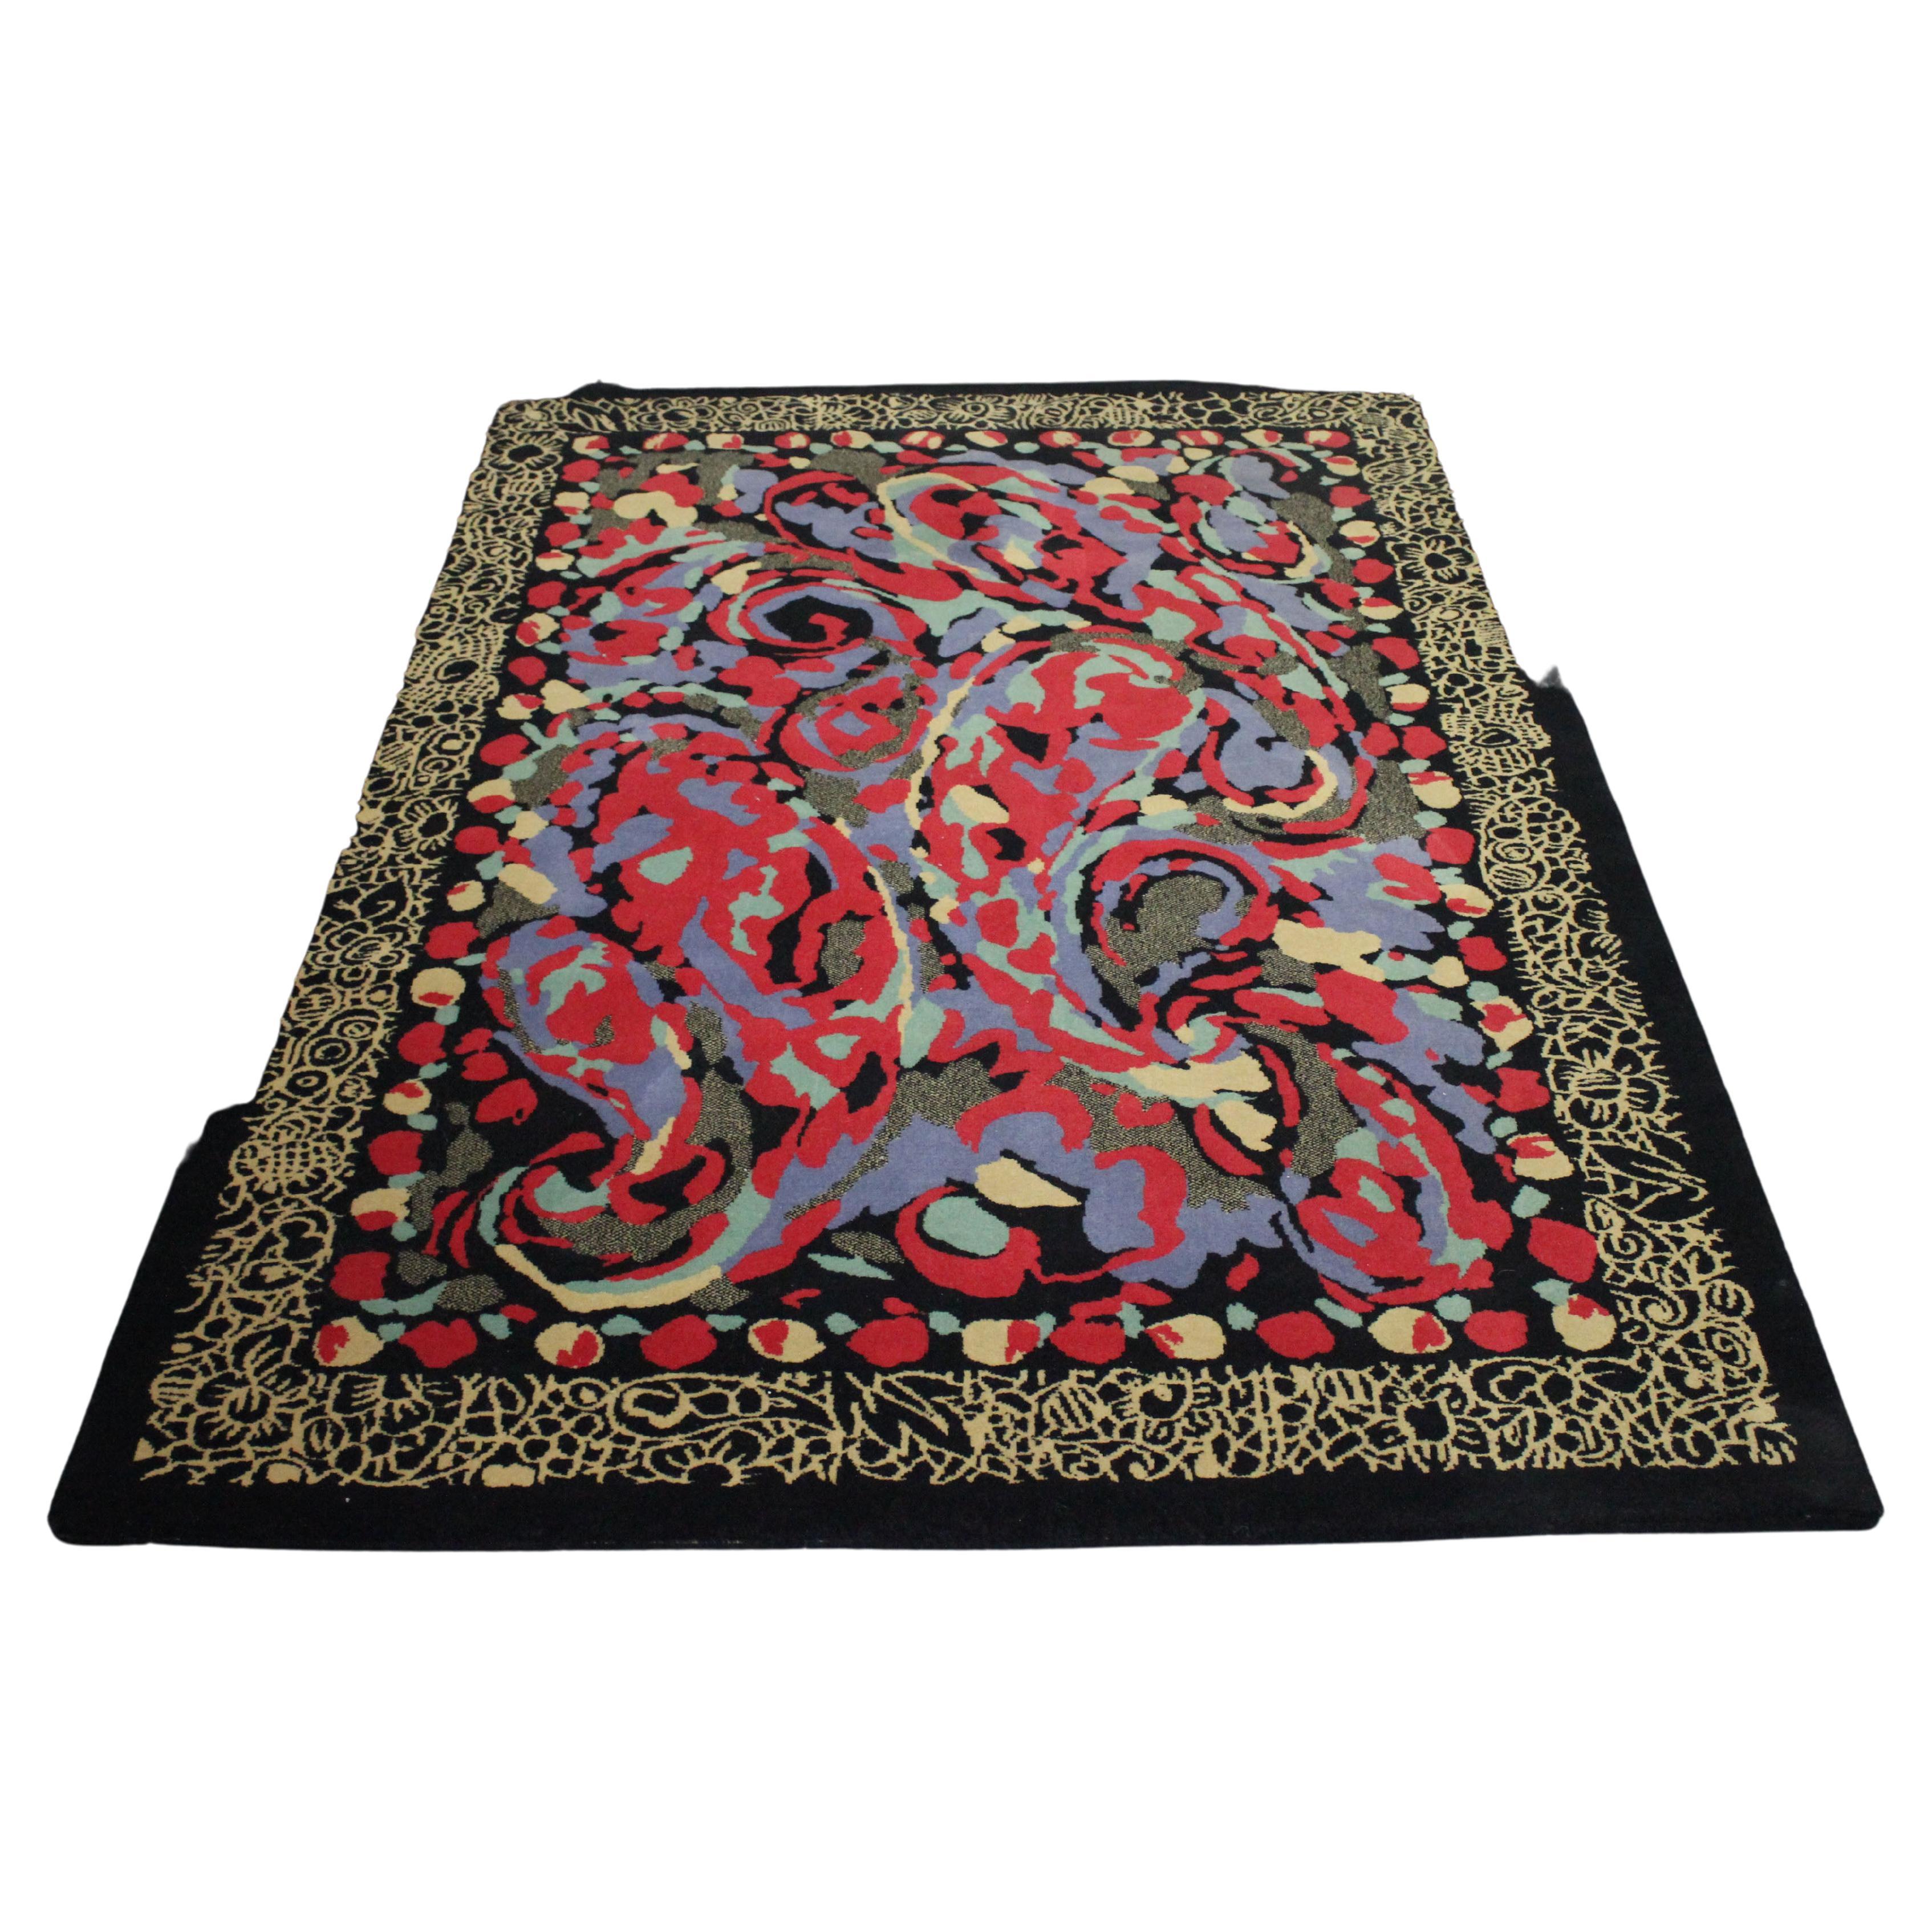 Carpet by Pierre Balmain for Van Neder Carpets, 1980s